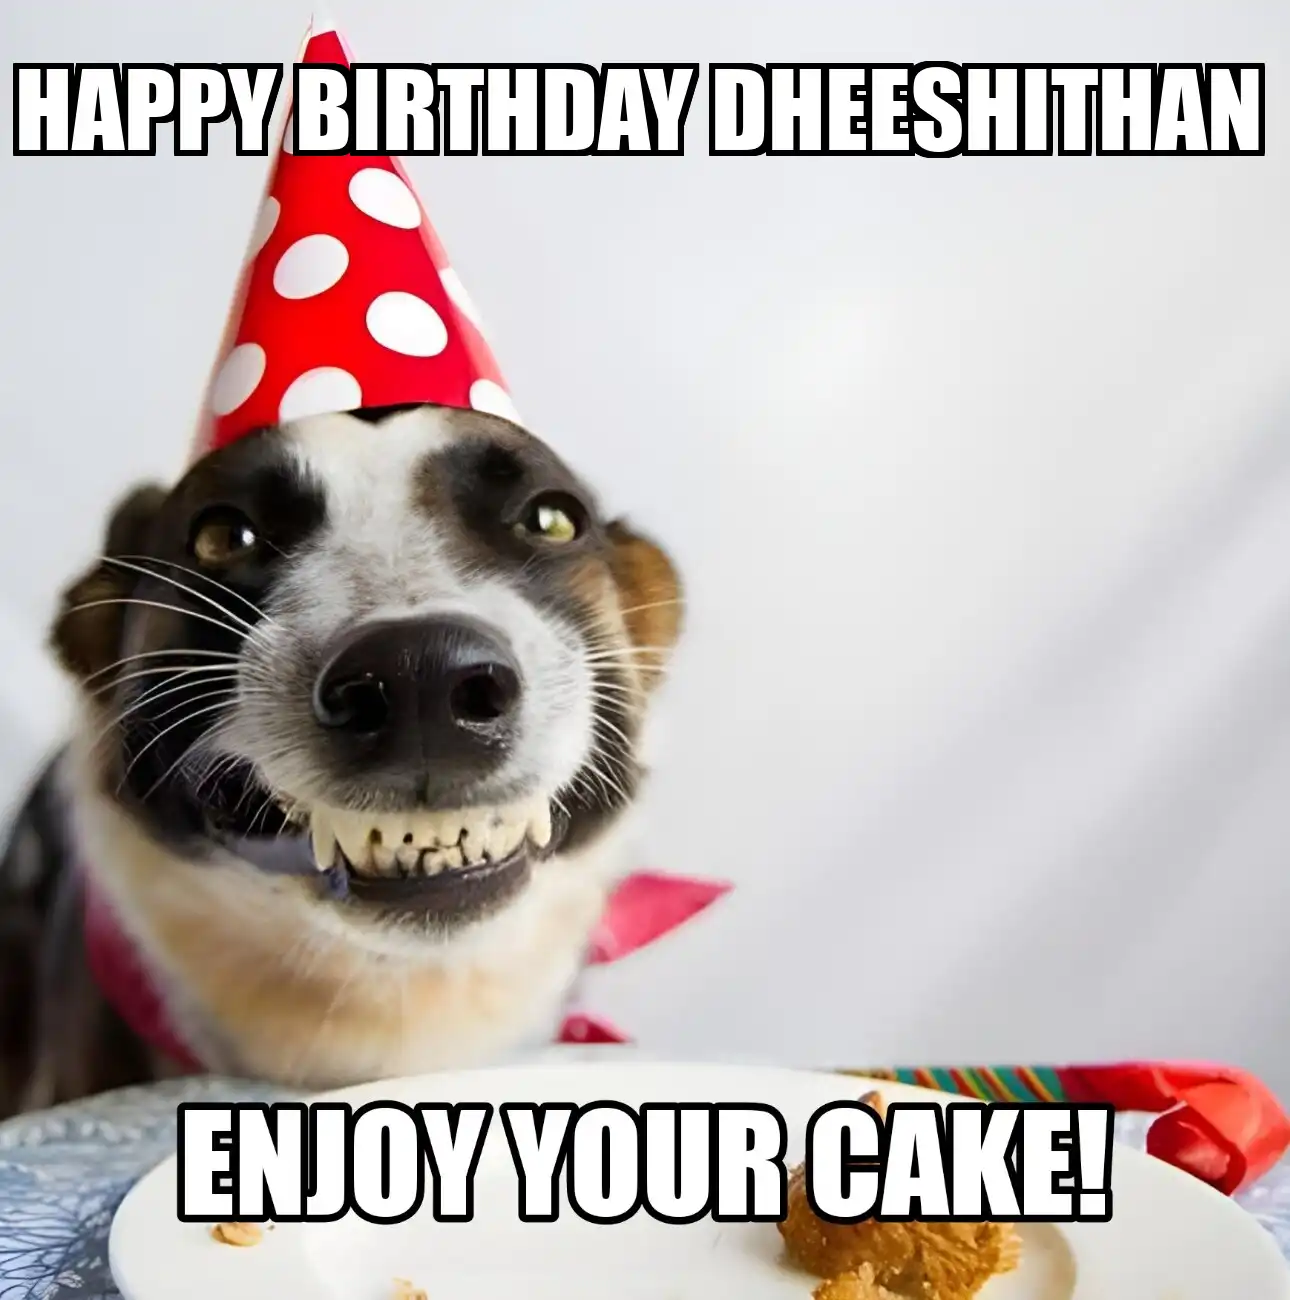 Happy Birthday Dheeshithan Enjoy Your Cake Dog Meme